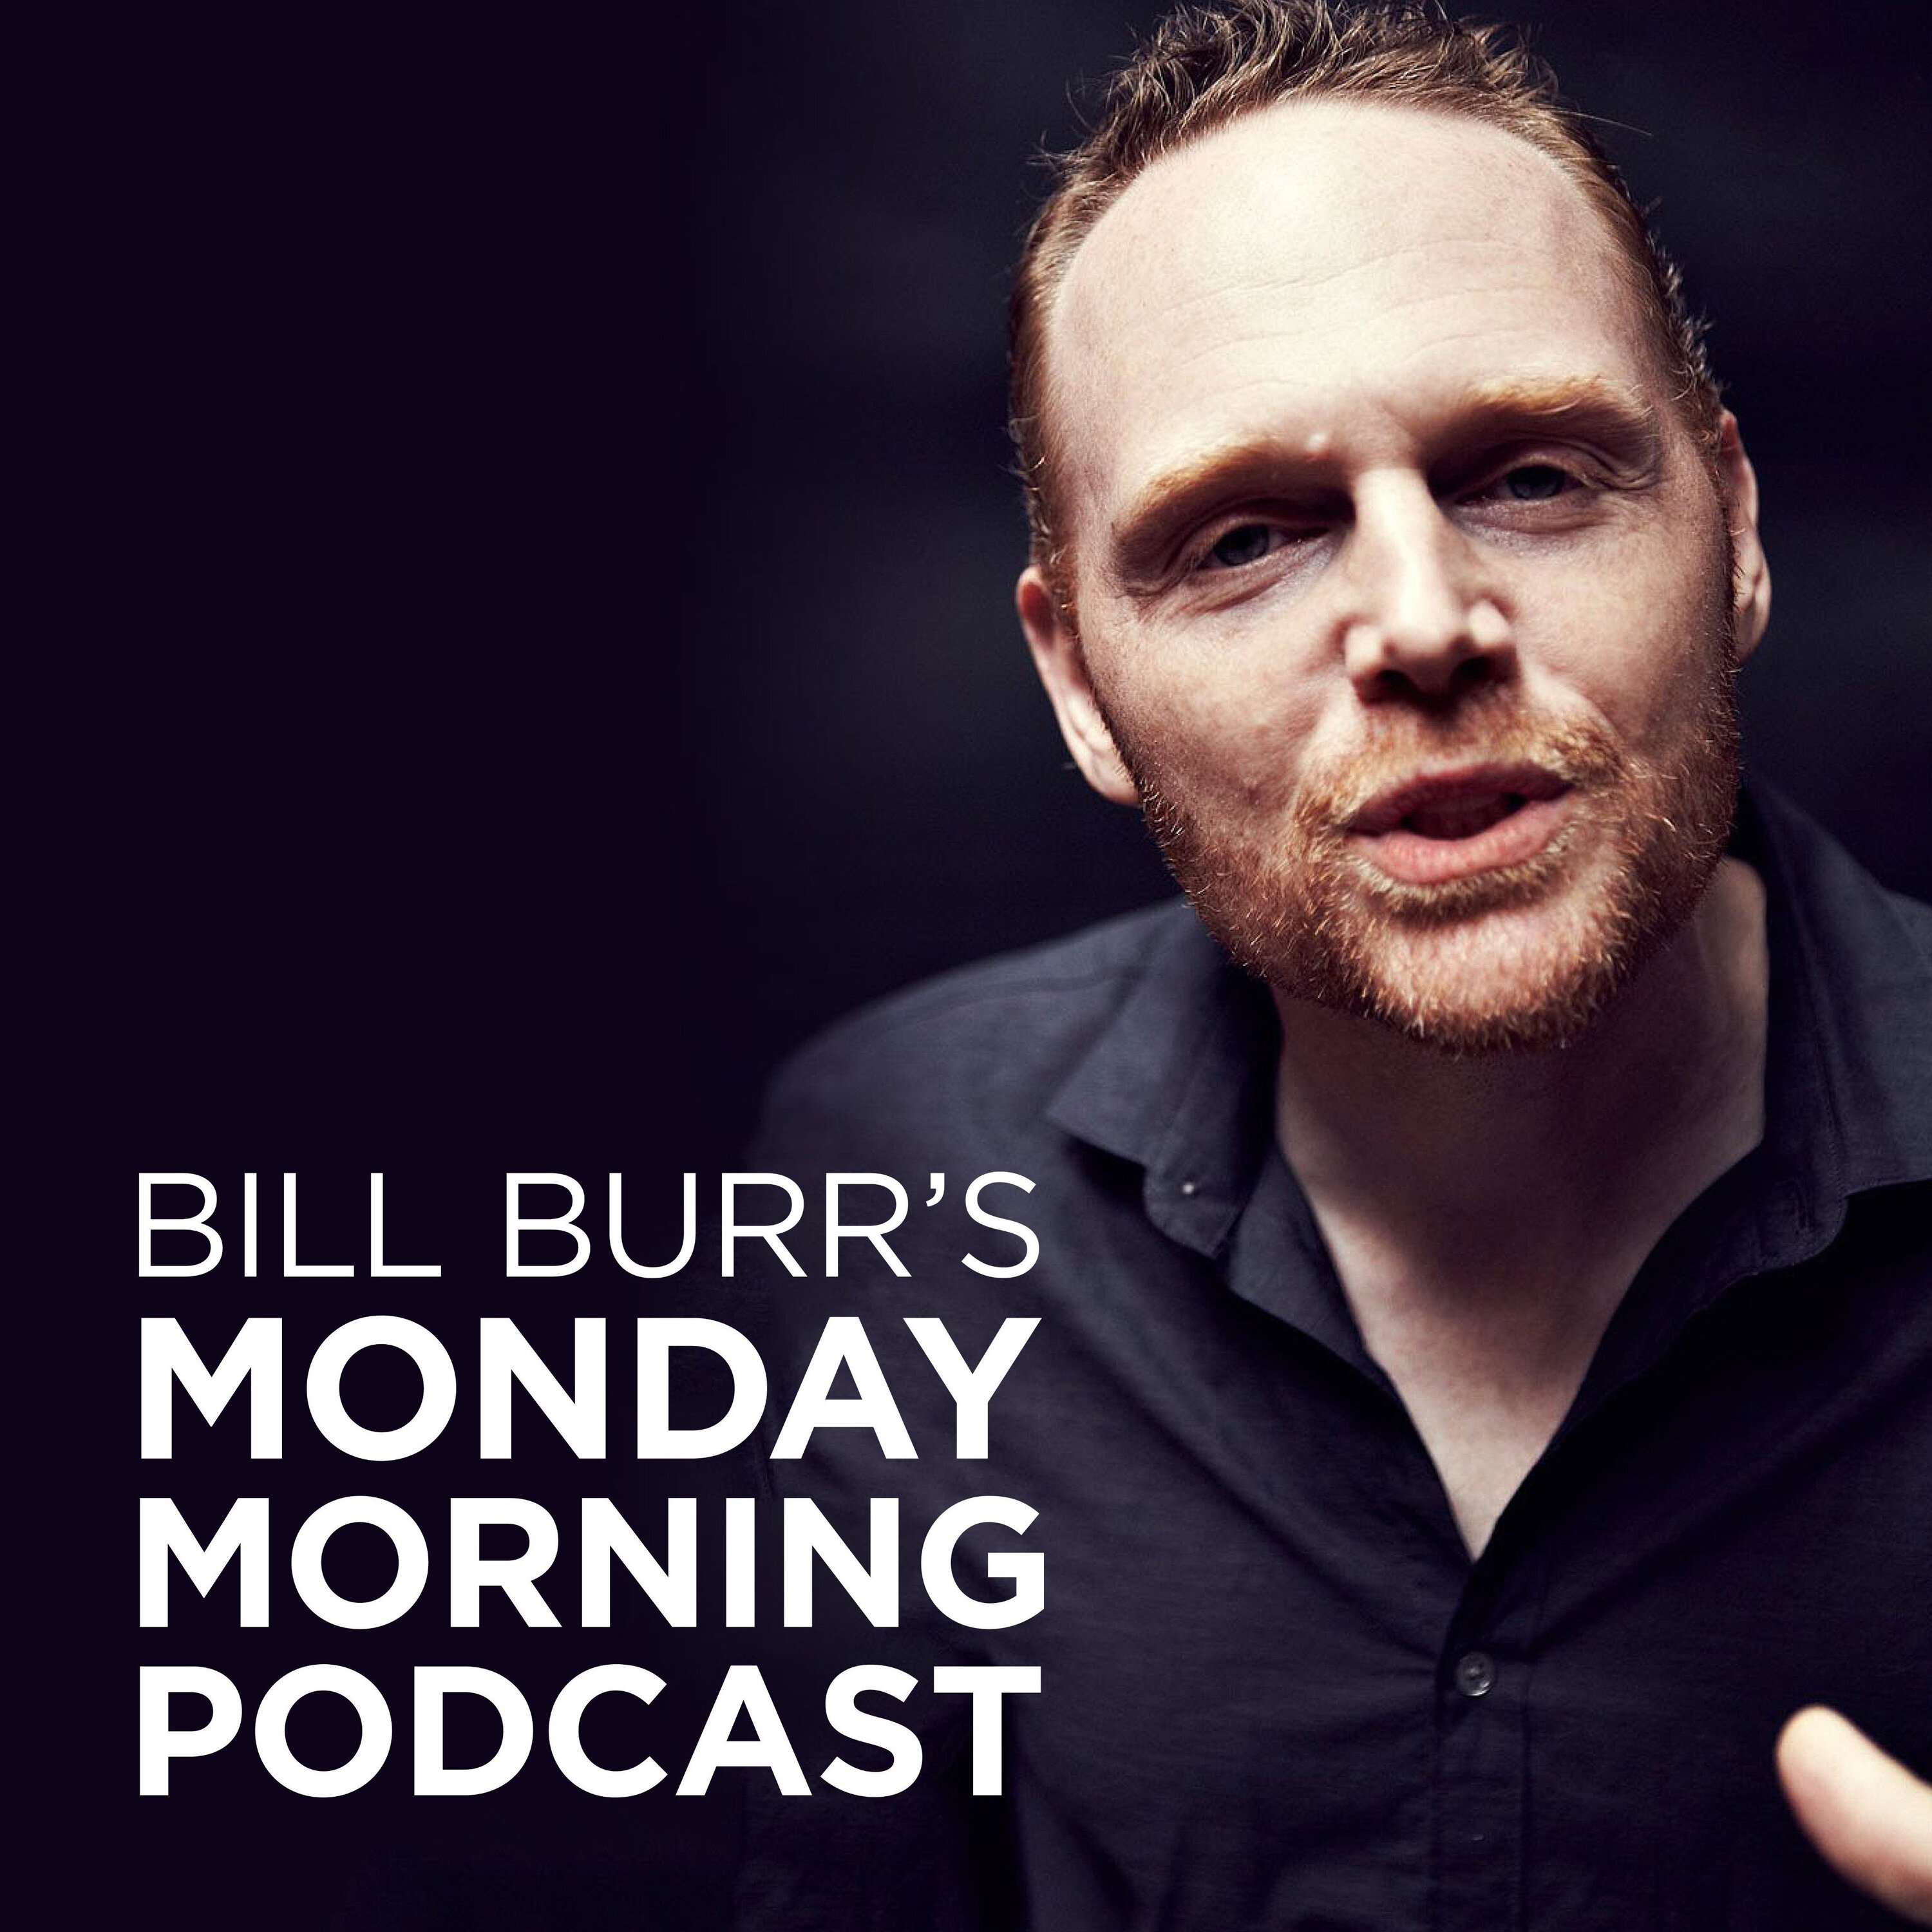 Monday Morning Podcast 8-1-22